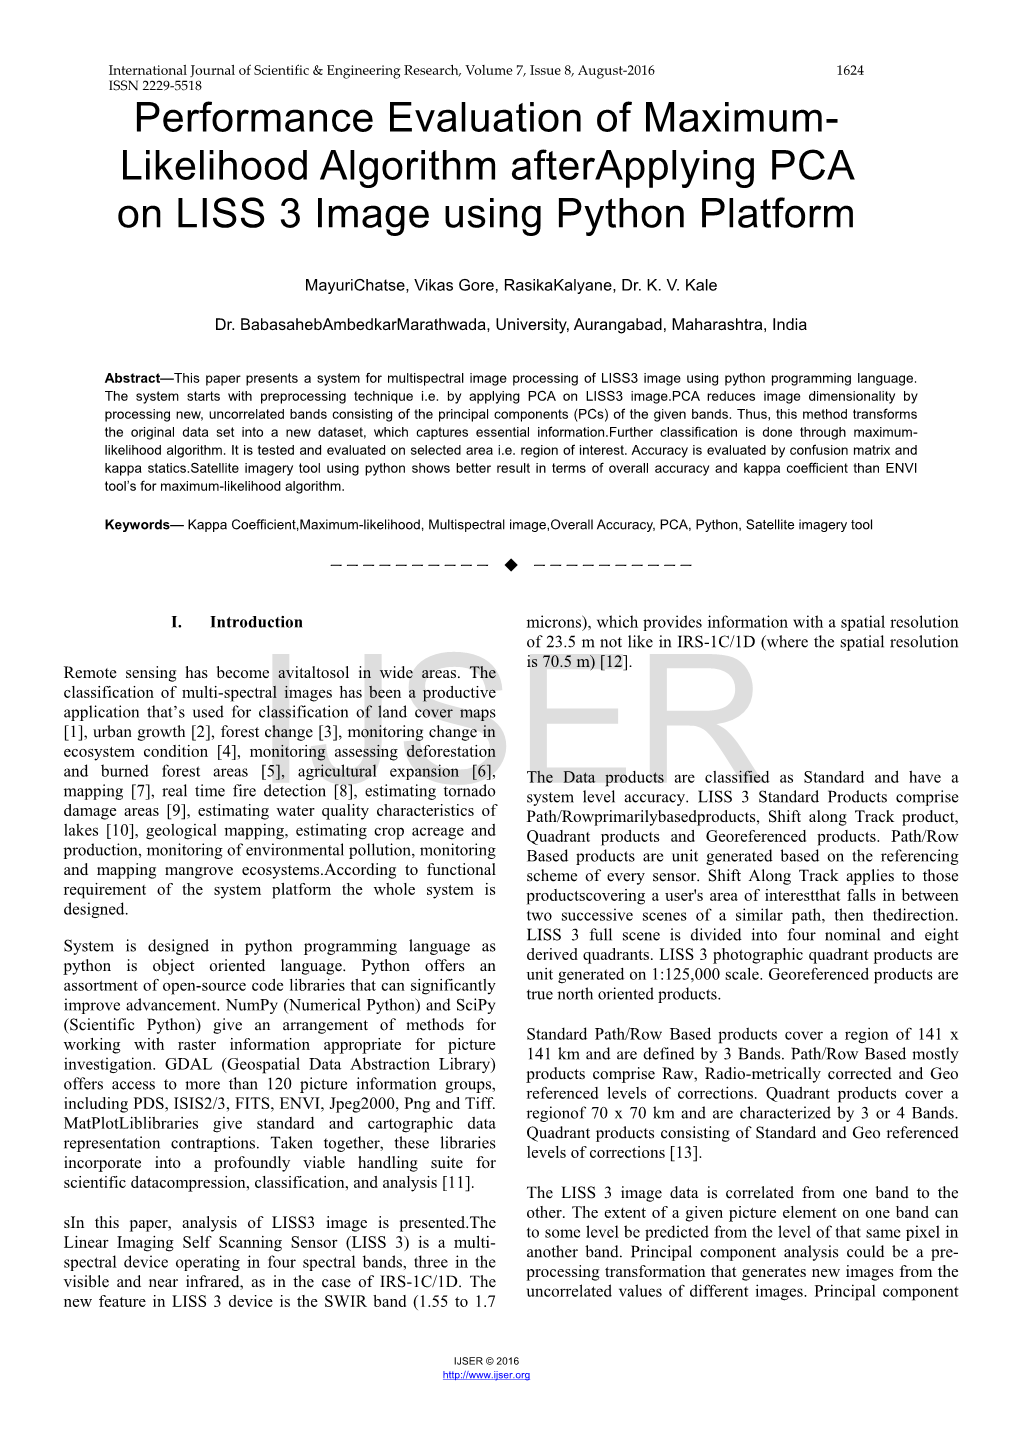 Likelihood Algorithm Afterapplying PCA on LISS 3 Image Using Python Platform